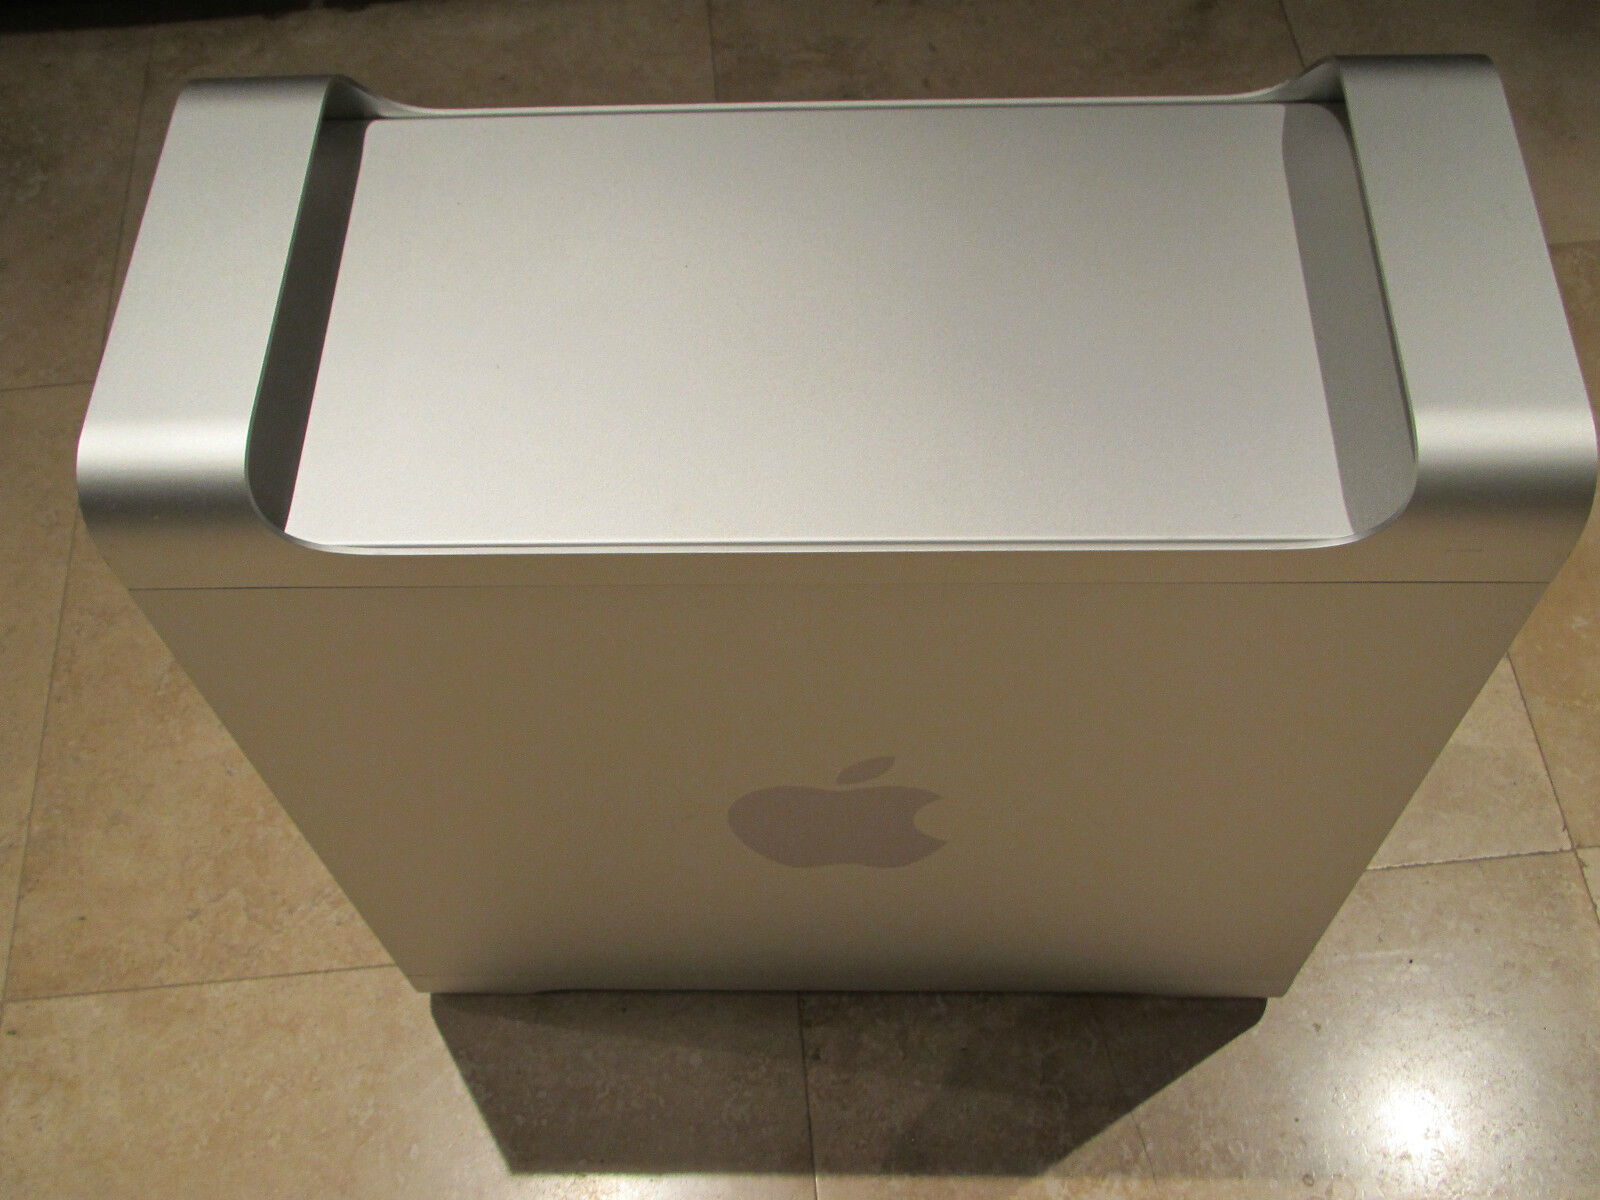 Apple Mac Pro Desktop 5,1 Twelve 12-Core 2.66Ghz Westmere 48GB RAM 1TB HD